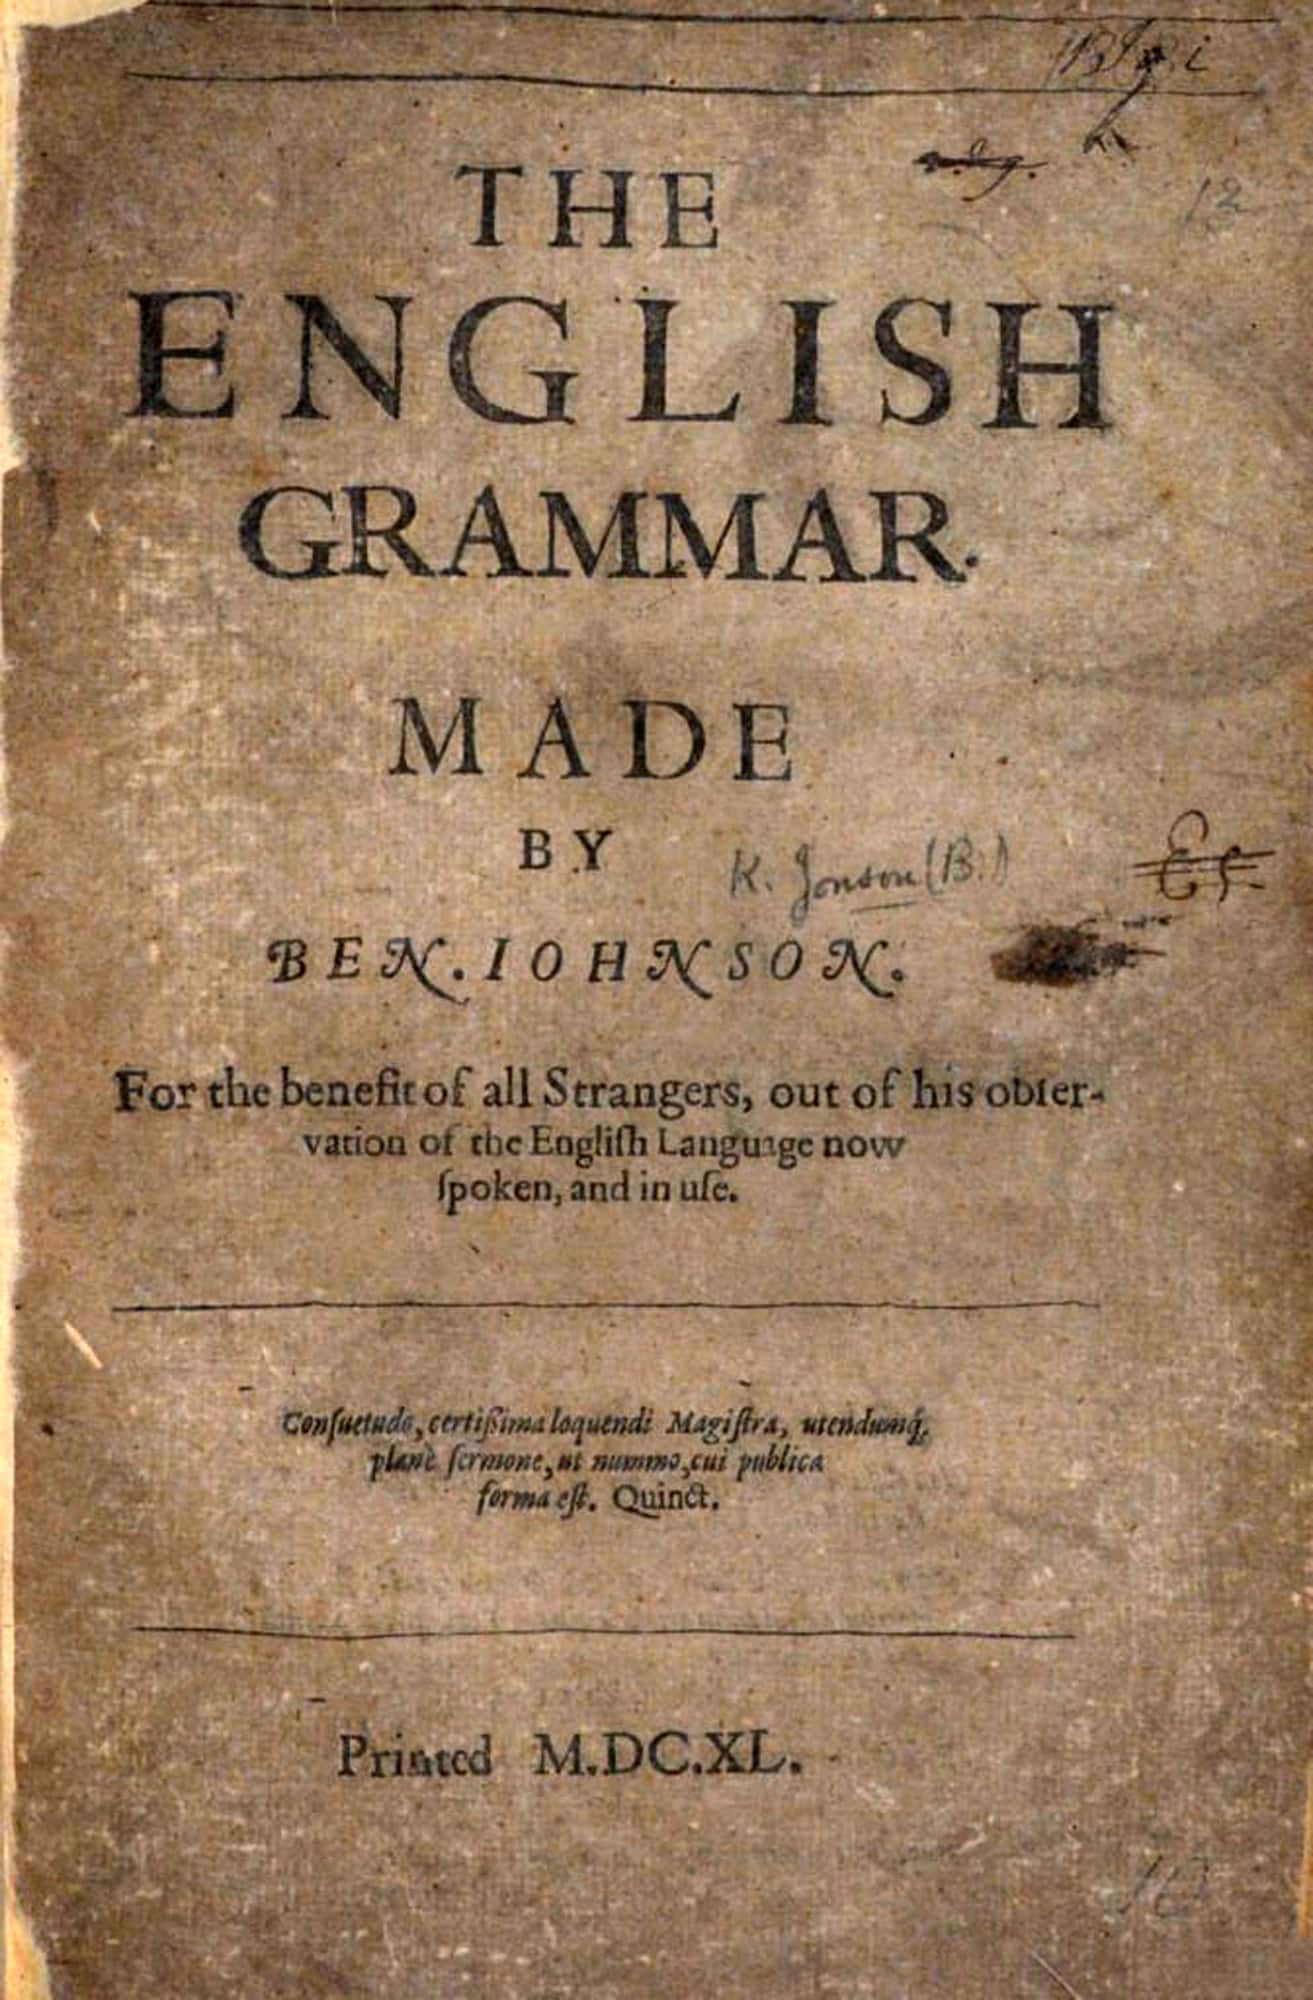 The English Grammar, Ben Jonson